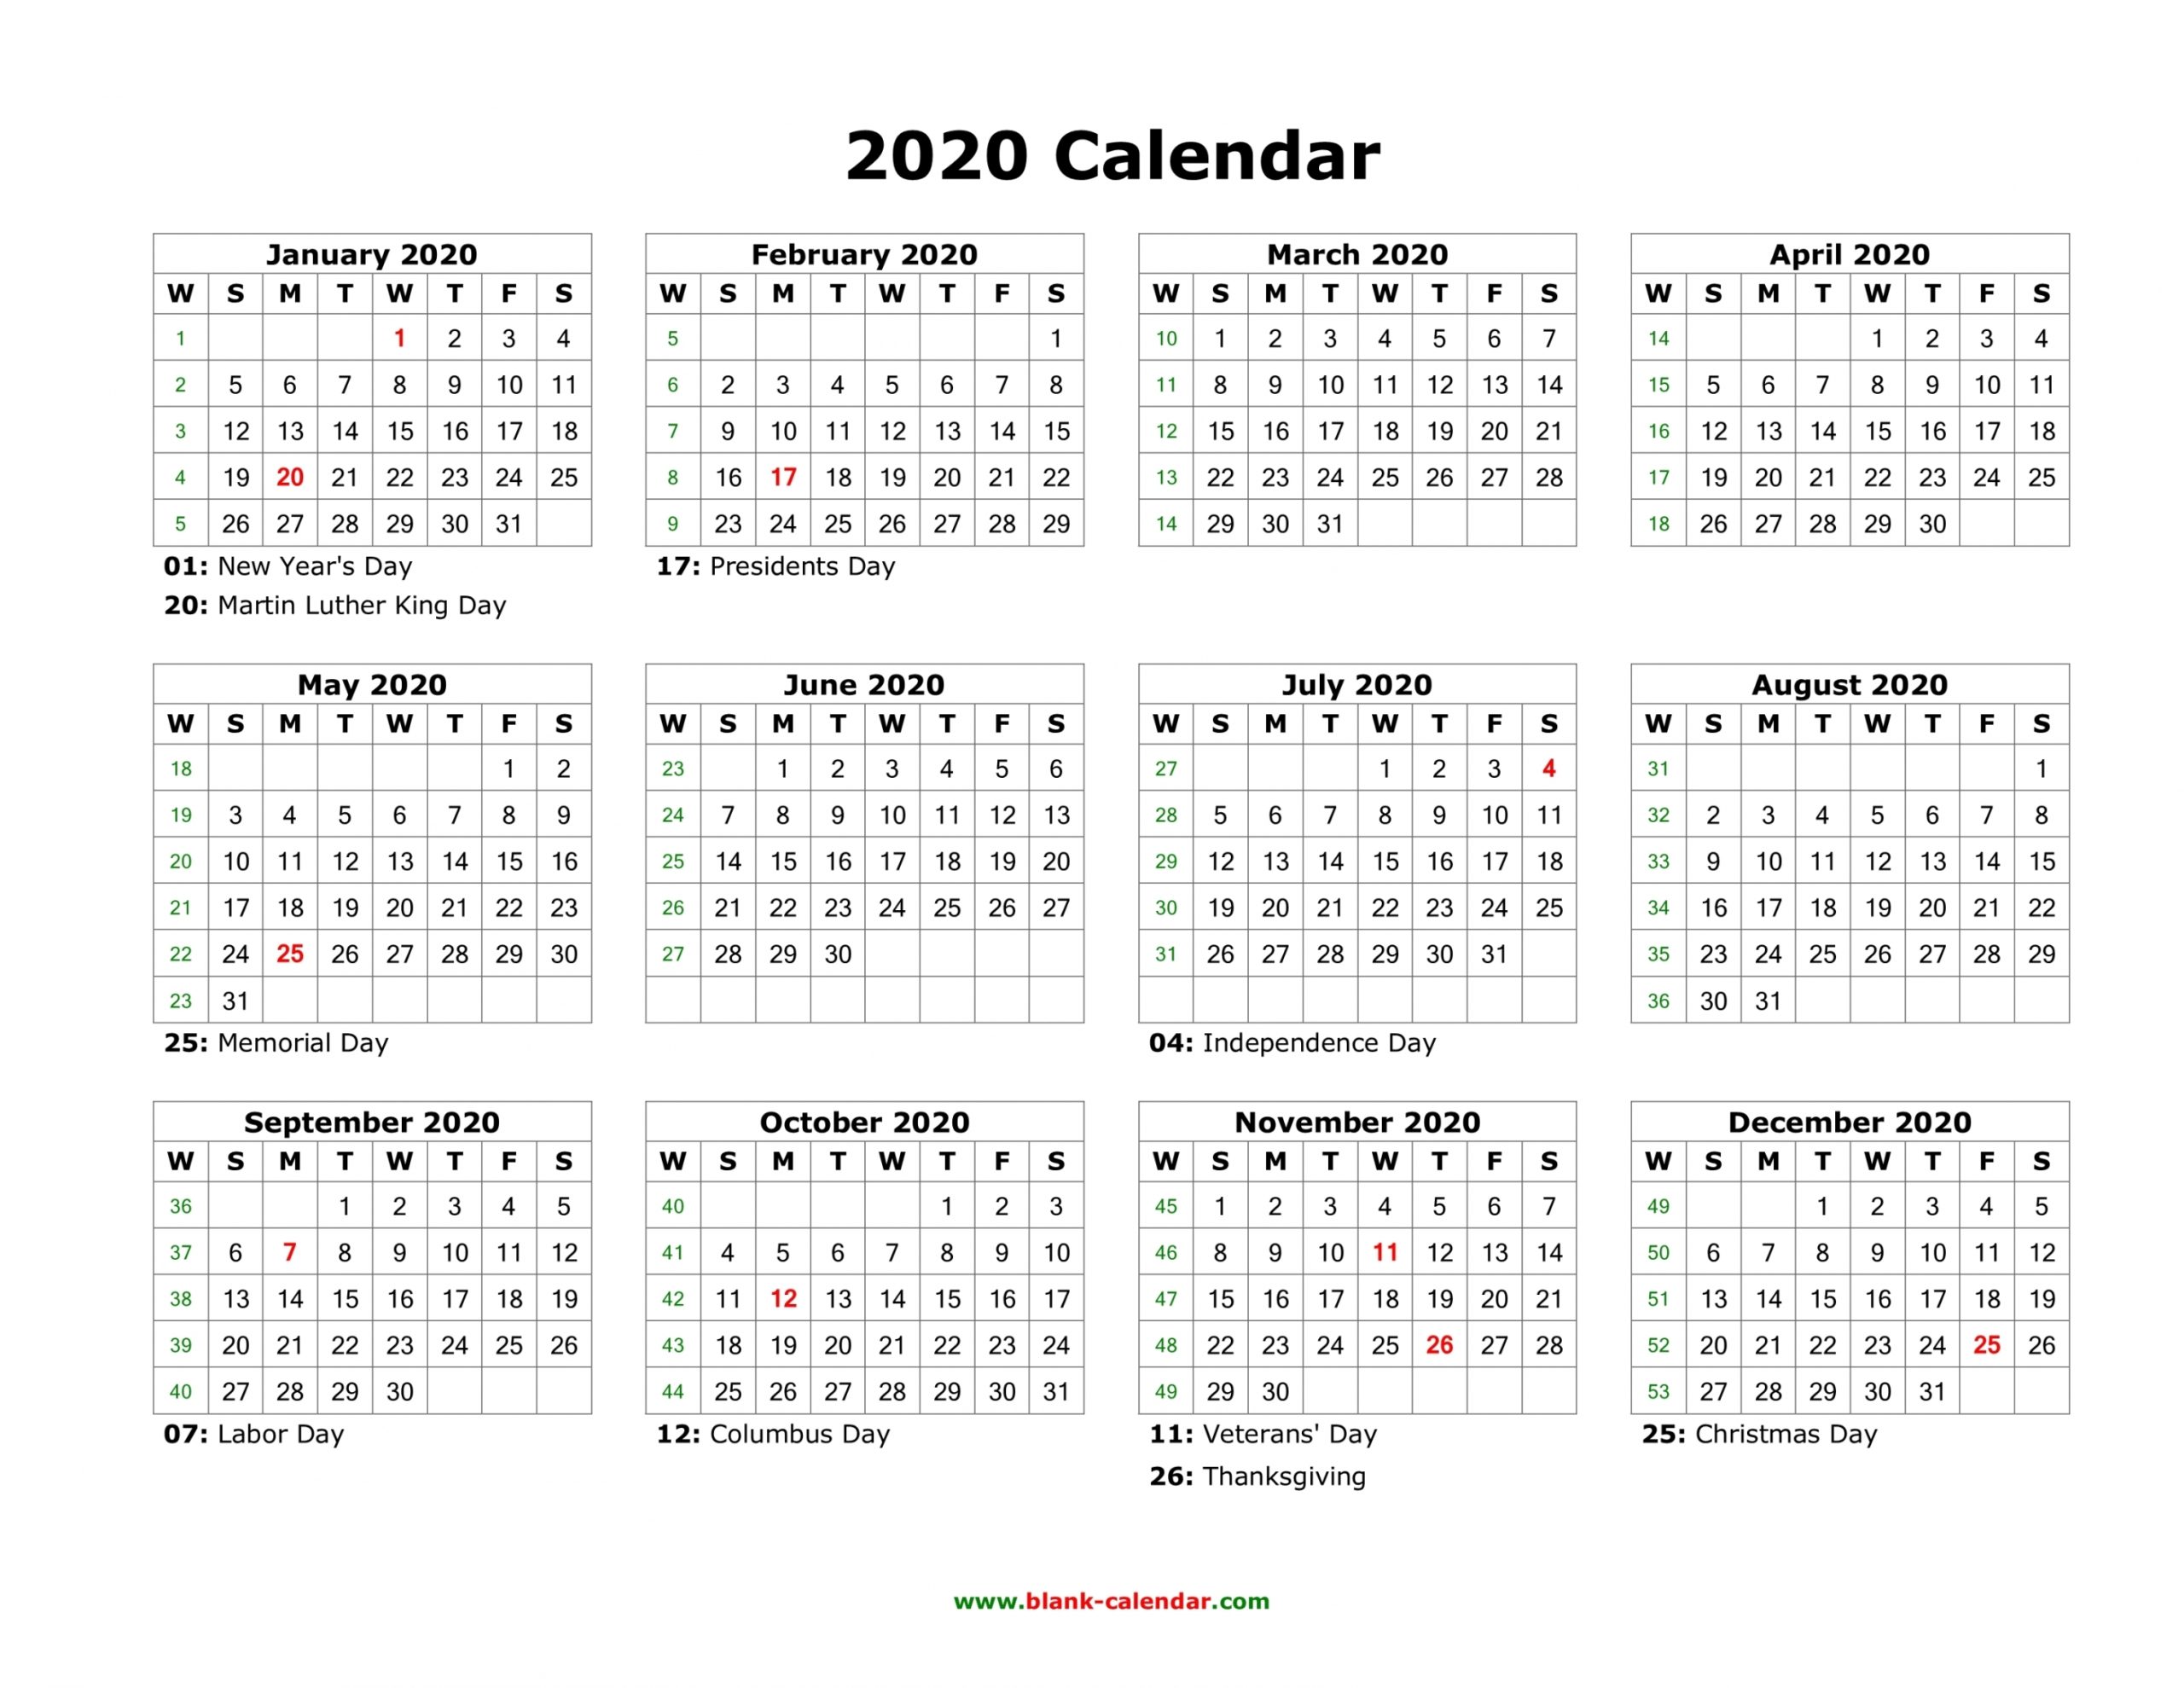 Printable Yearly Calendar 2020